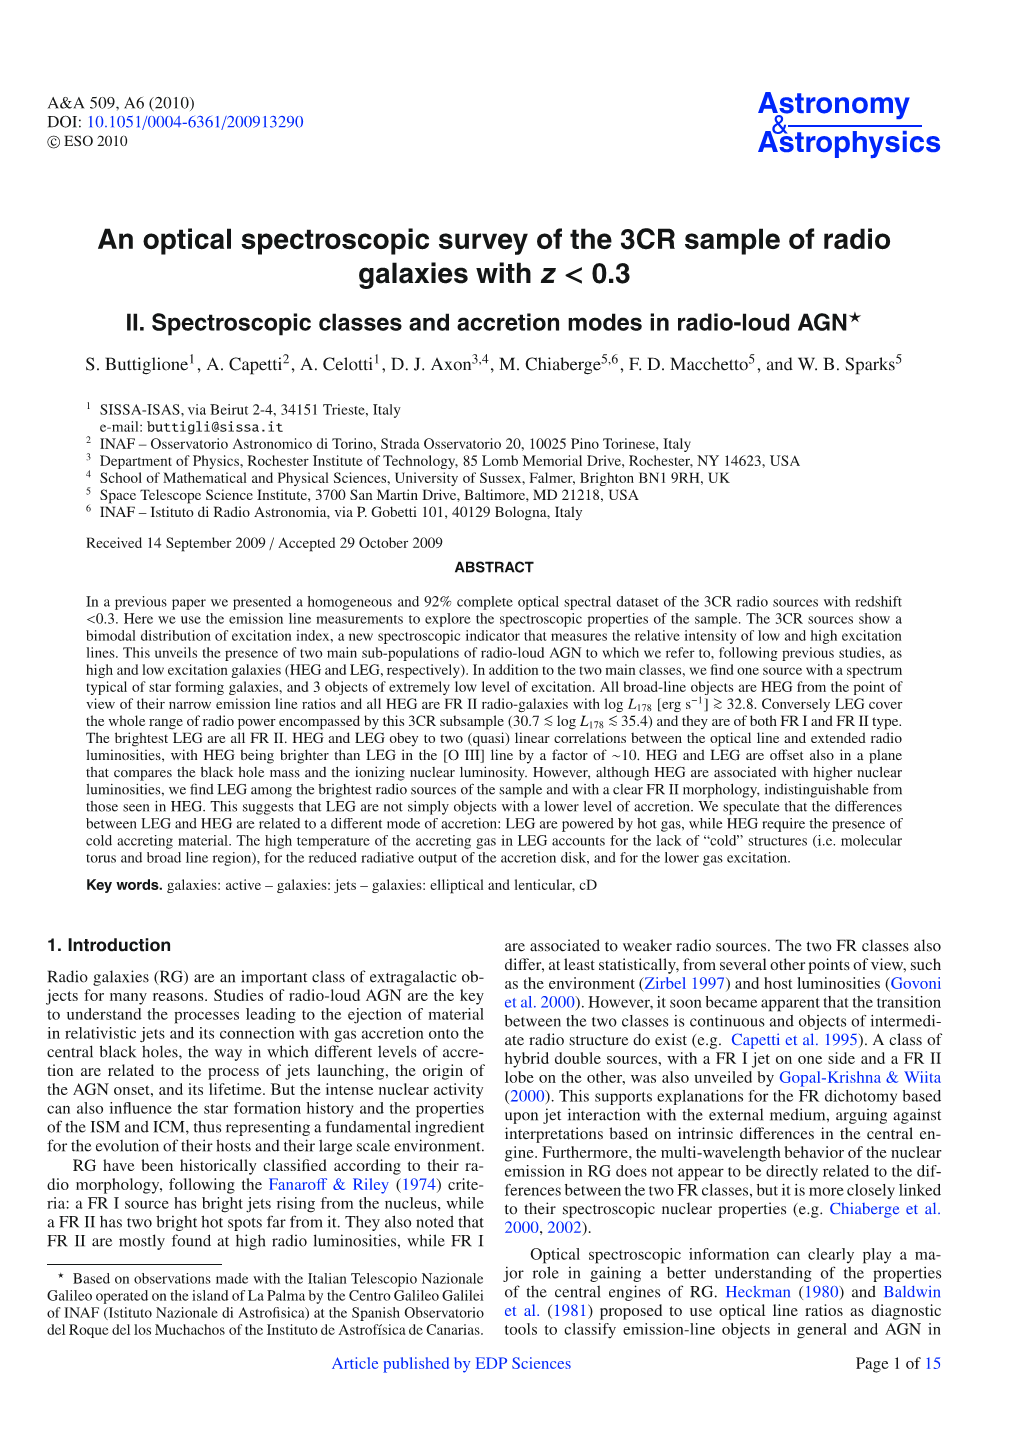 An Optical Spectroscopic Survey of the 3CR